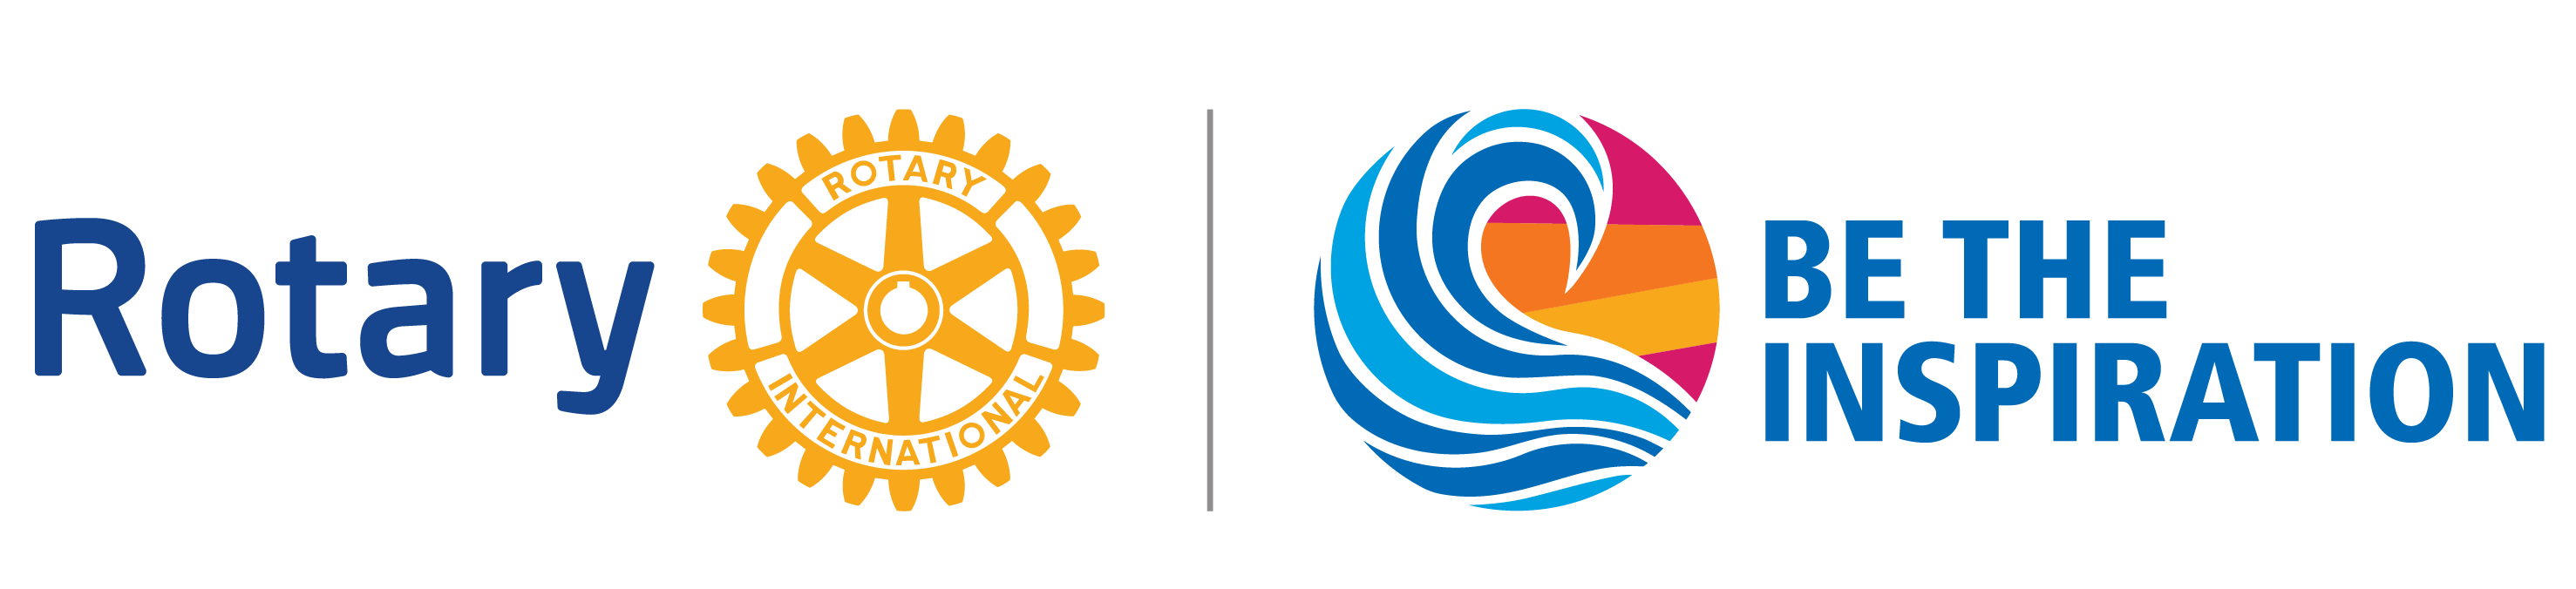 Rotary Logo - Download Rotary Logos, Themes, Photo International